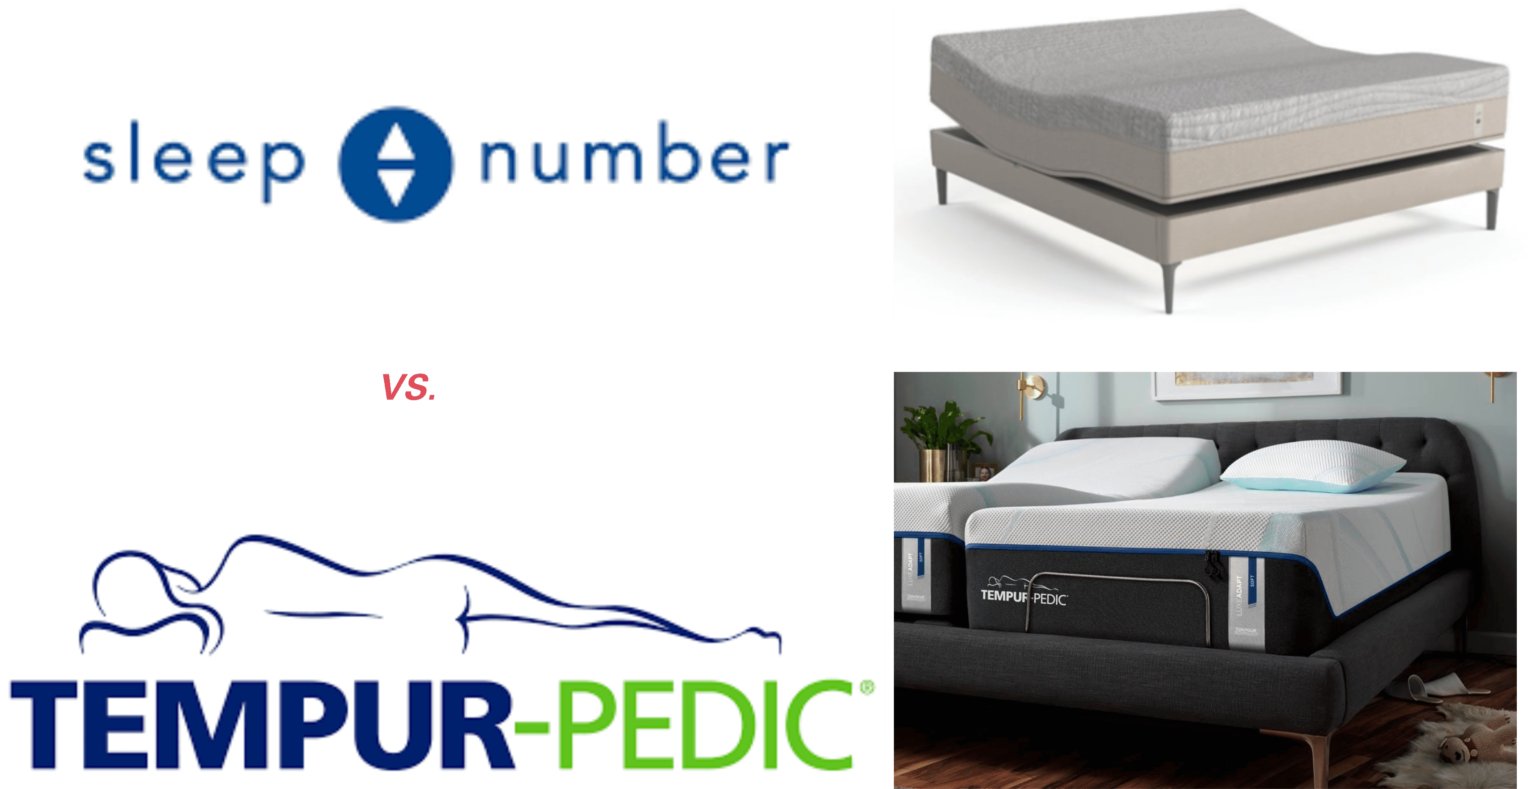 mattress equivalent to sleep number